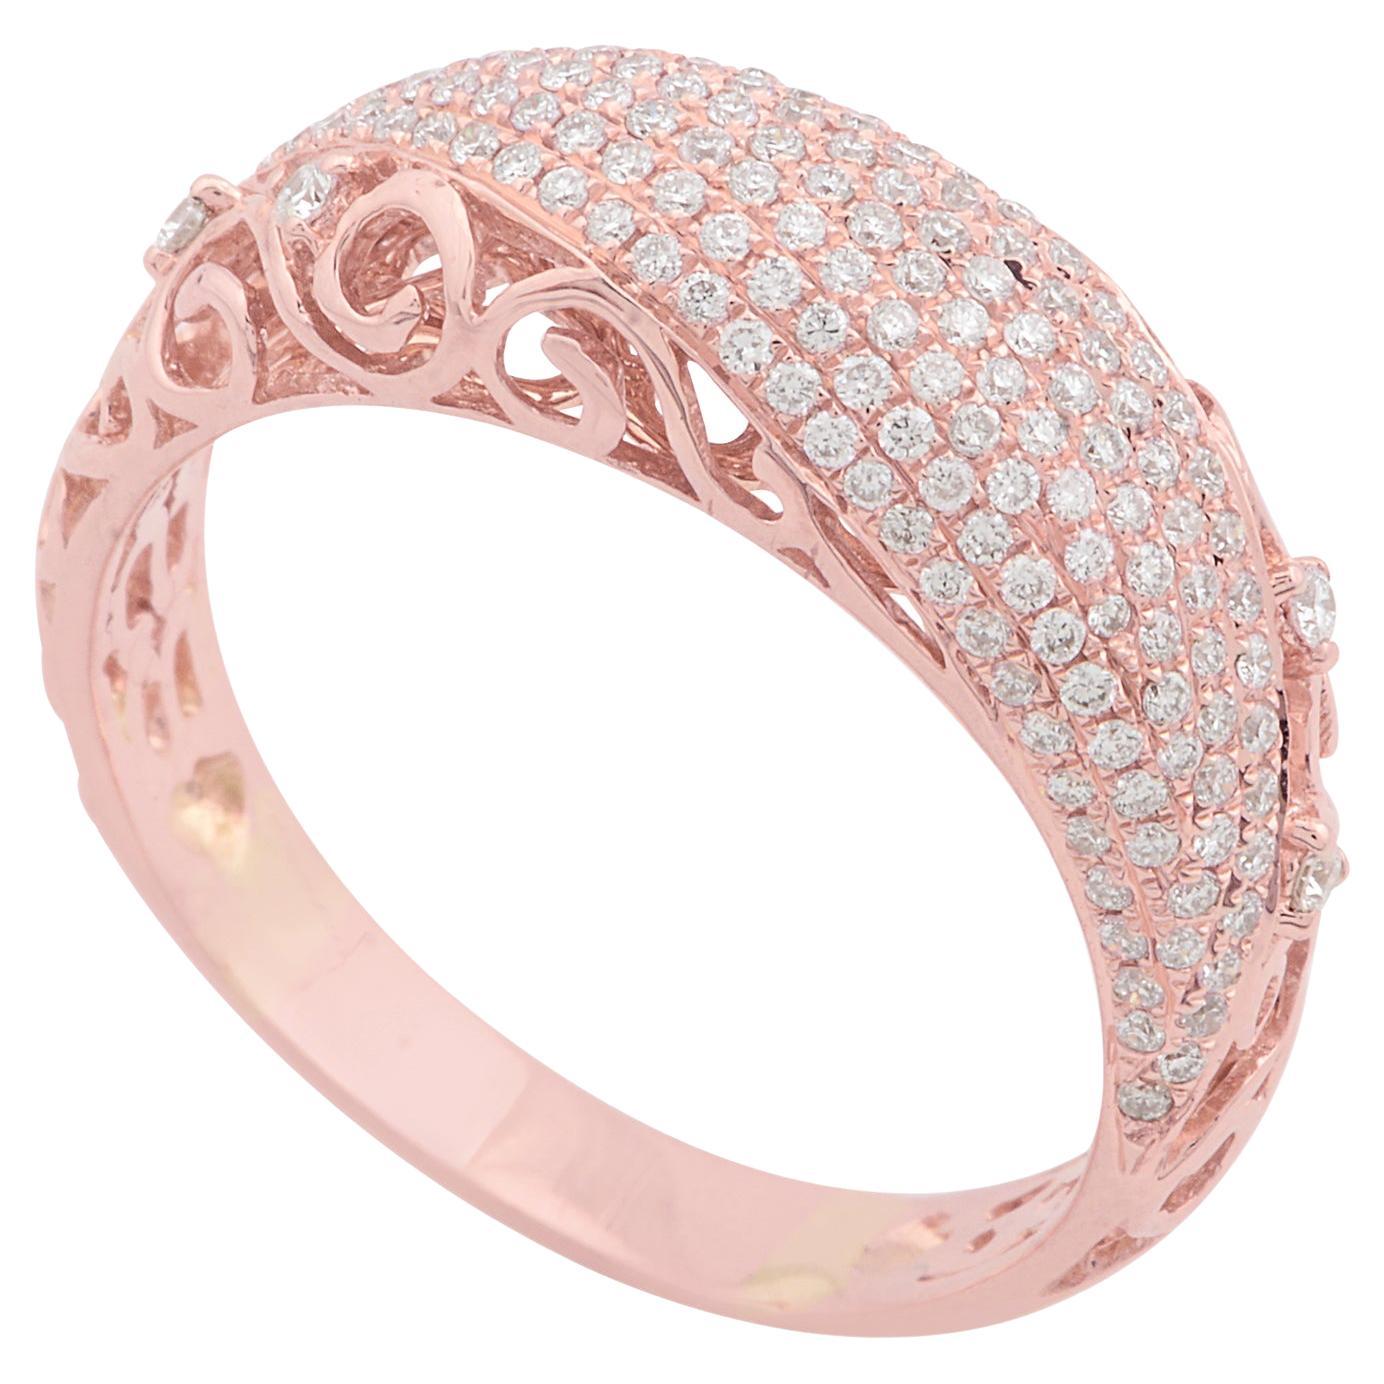 For Sale:  0.70 Carat Diamond Pave Filigree Design Ring Solid 18k Rose Gold Fine Jewelry